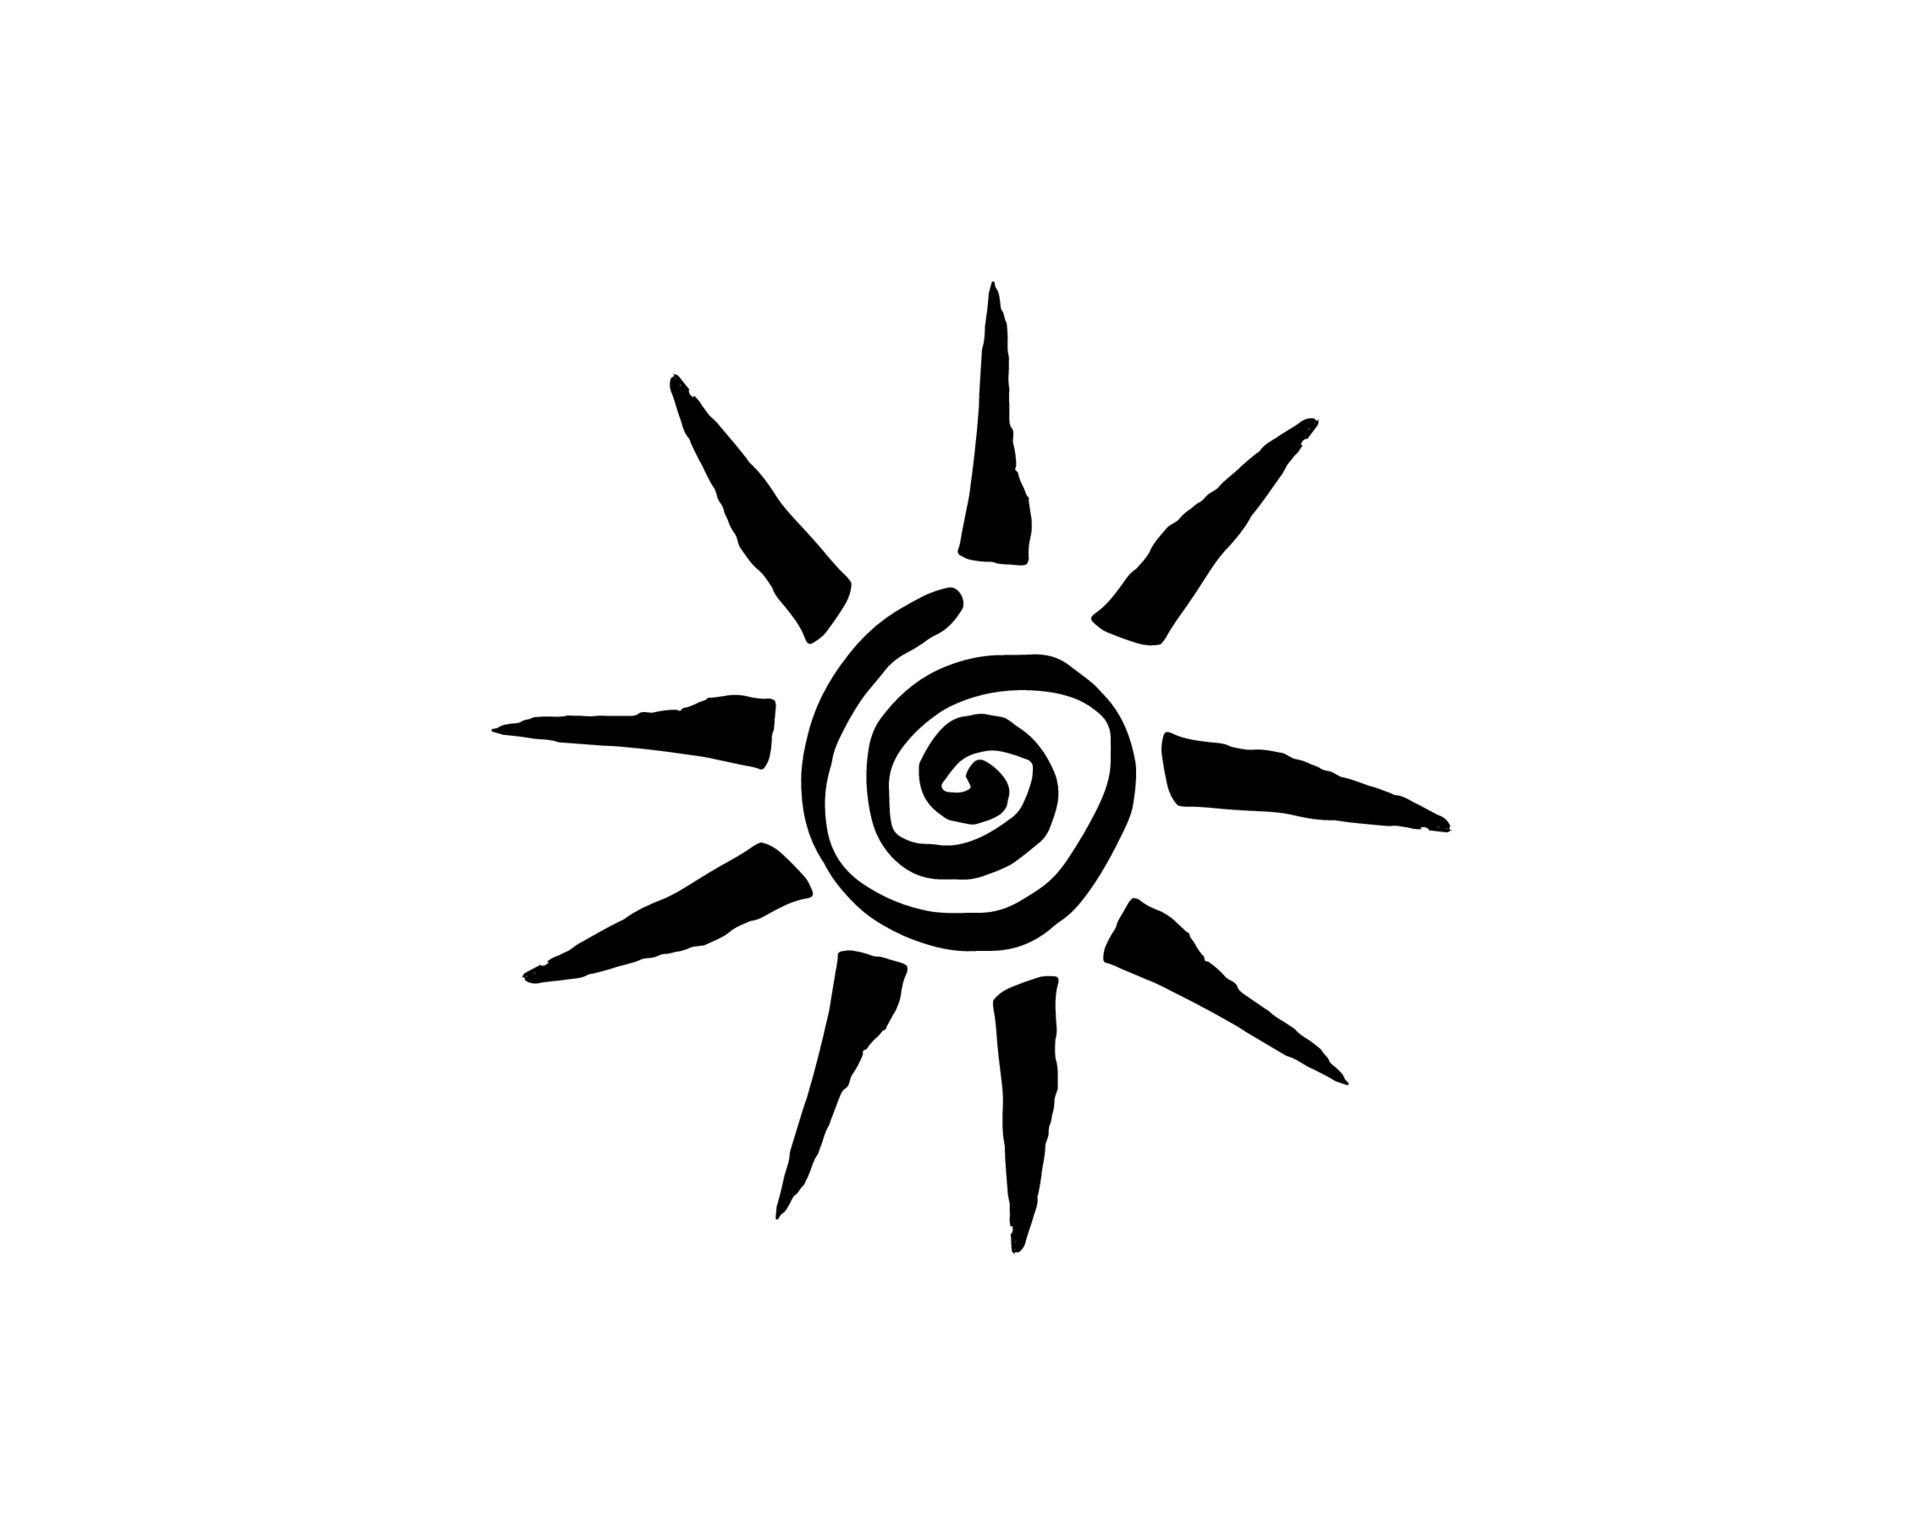 Black Tribal Sun Tattoo Sonnenrad Symbol sun wheel sign Summer icon The  ancient European esoteric element Logo Graphic element spiral shape  Vector stroke brush design isolated or white background 5675795 Vector Art